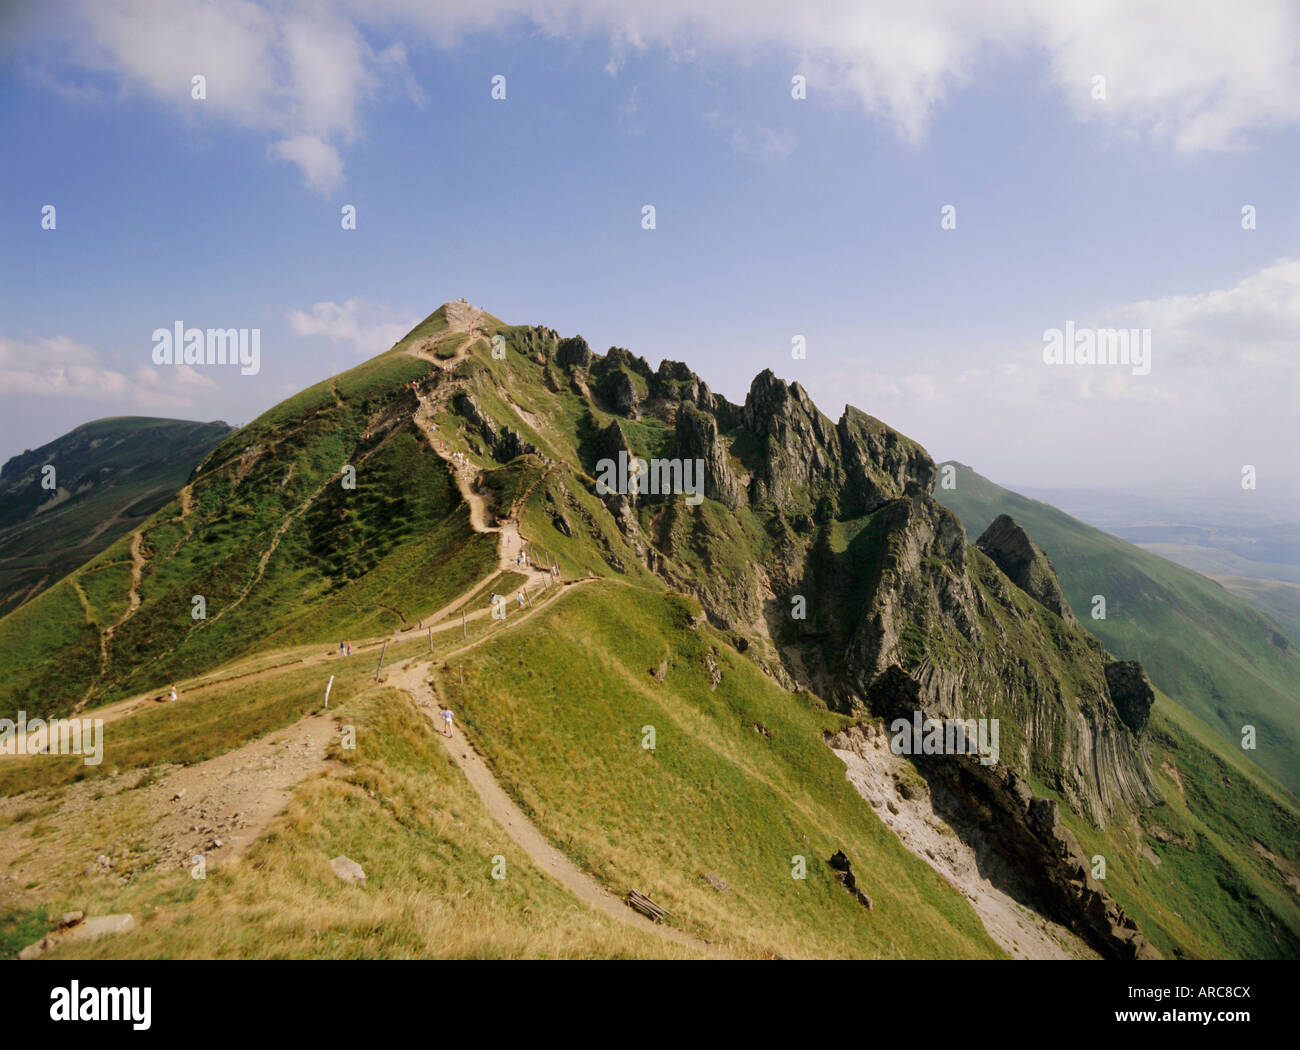 Il vertice di Puy de Sancy, Puy de Dome, Parco Naturel Regional des Volcans d'Auvergne, Massiccio centrale, Aquitania, in Francia, in Europa Foto Stock